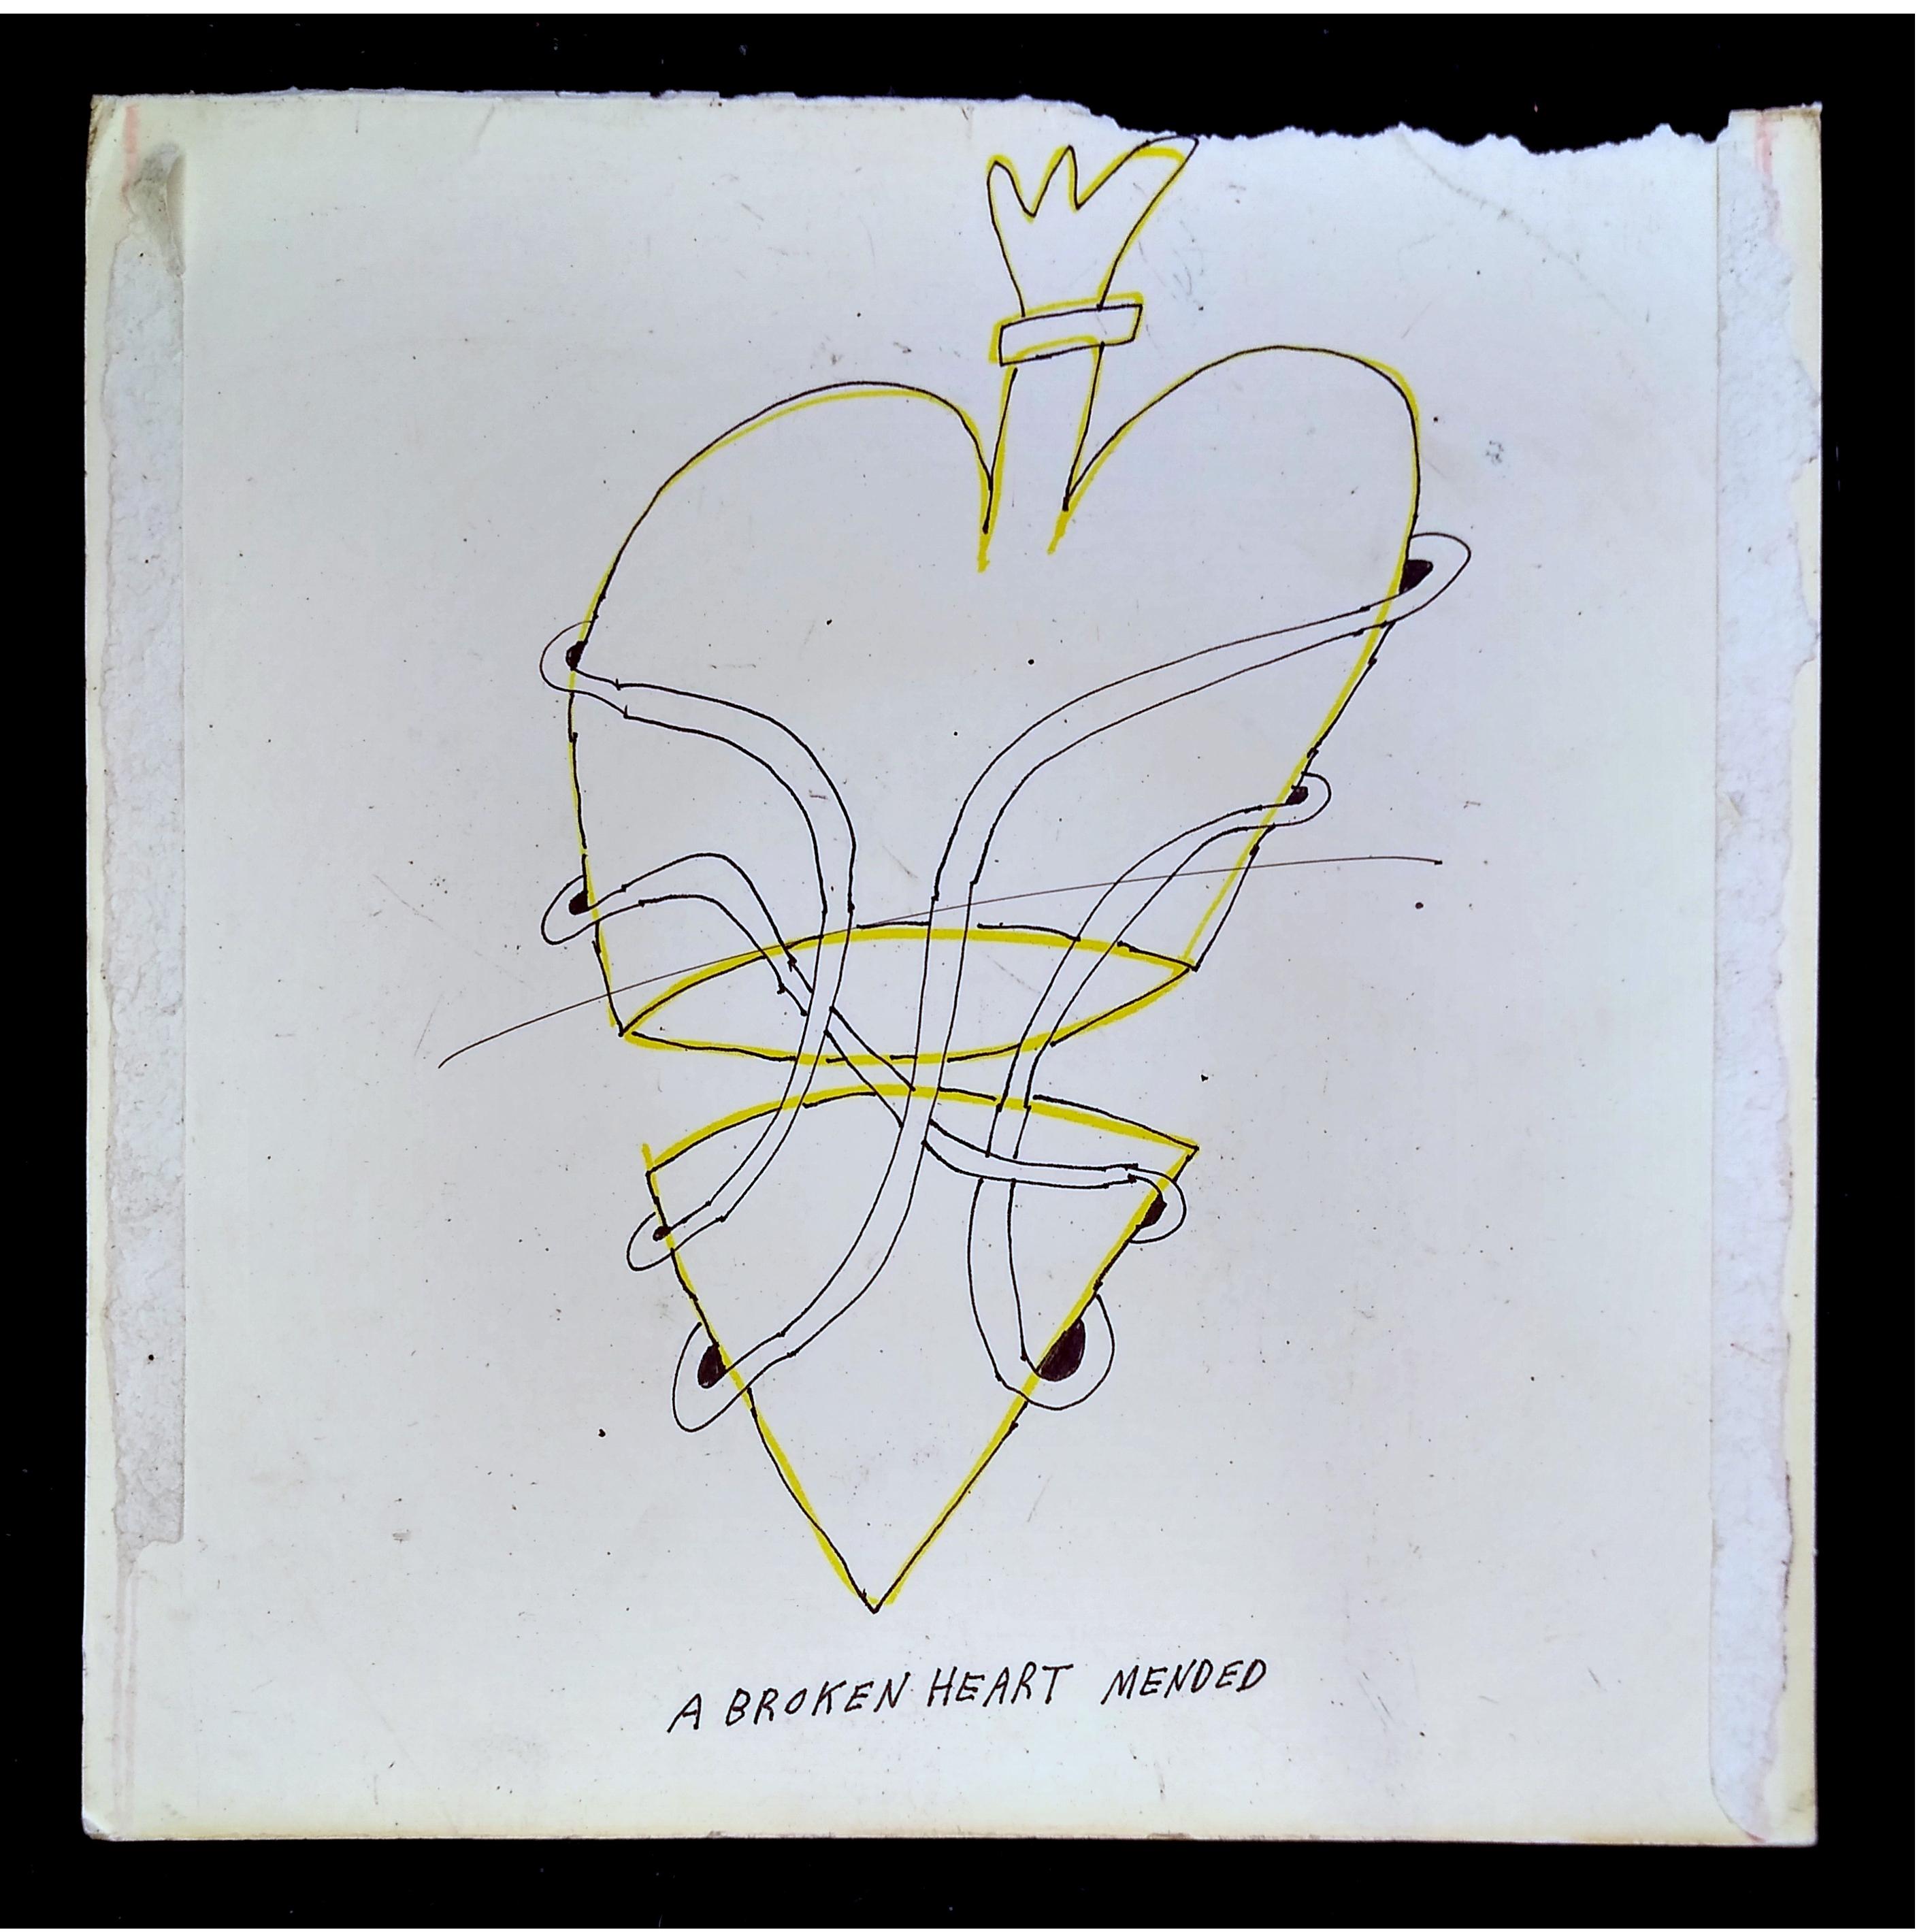 Jon Sarkin - "A broken heart mended" - 12.5" x 12.5" - Permanent marker, 2020